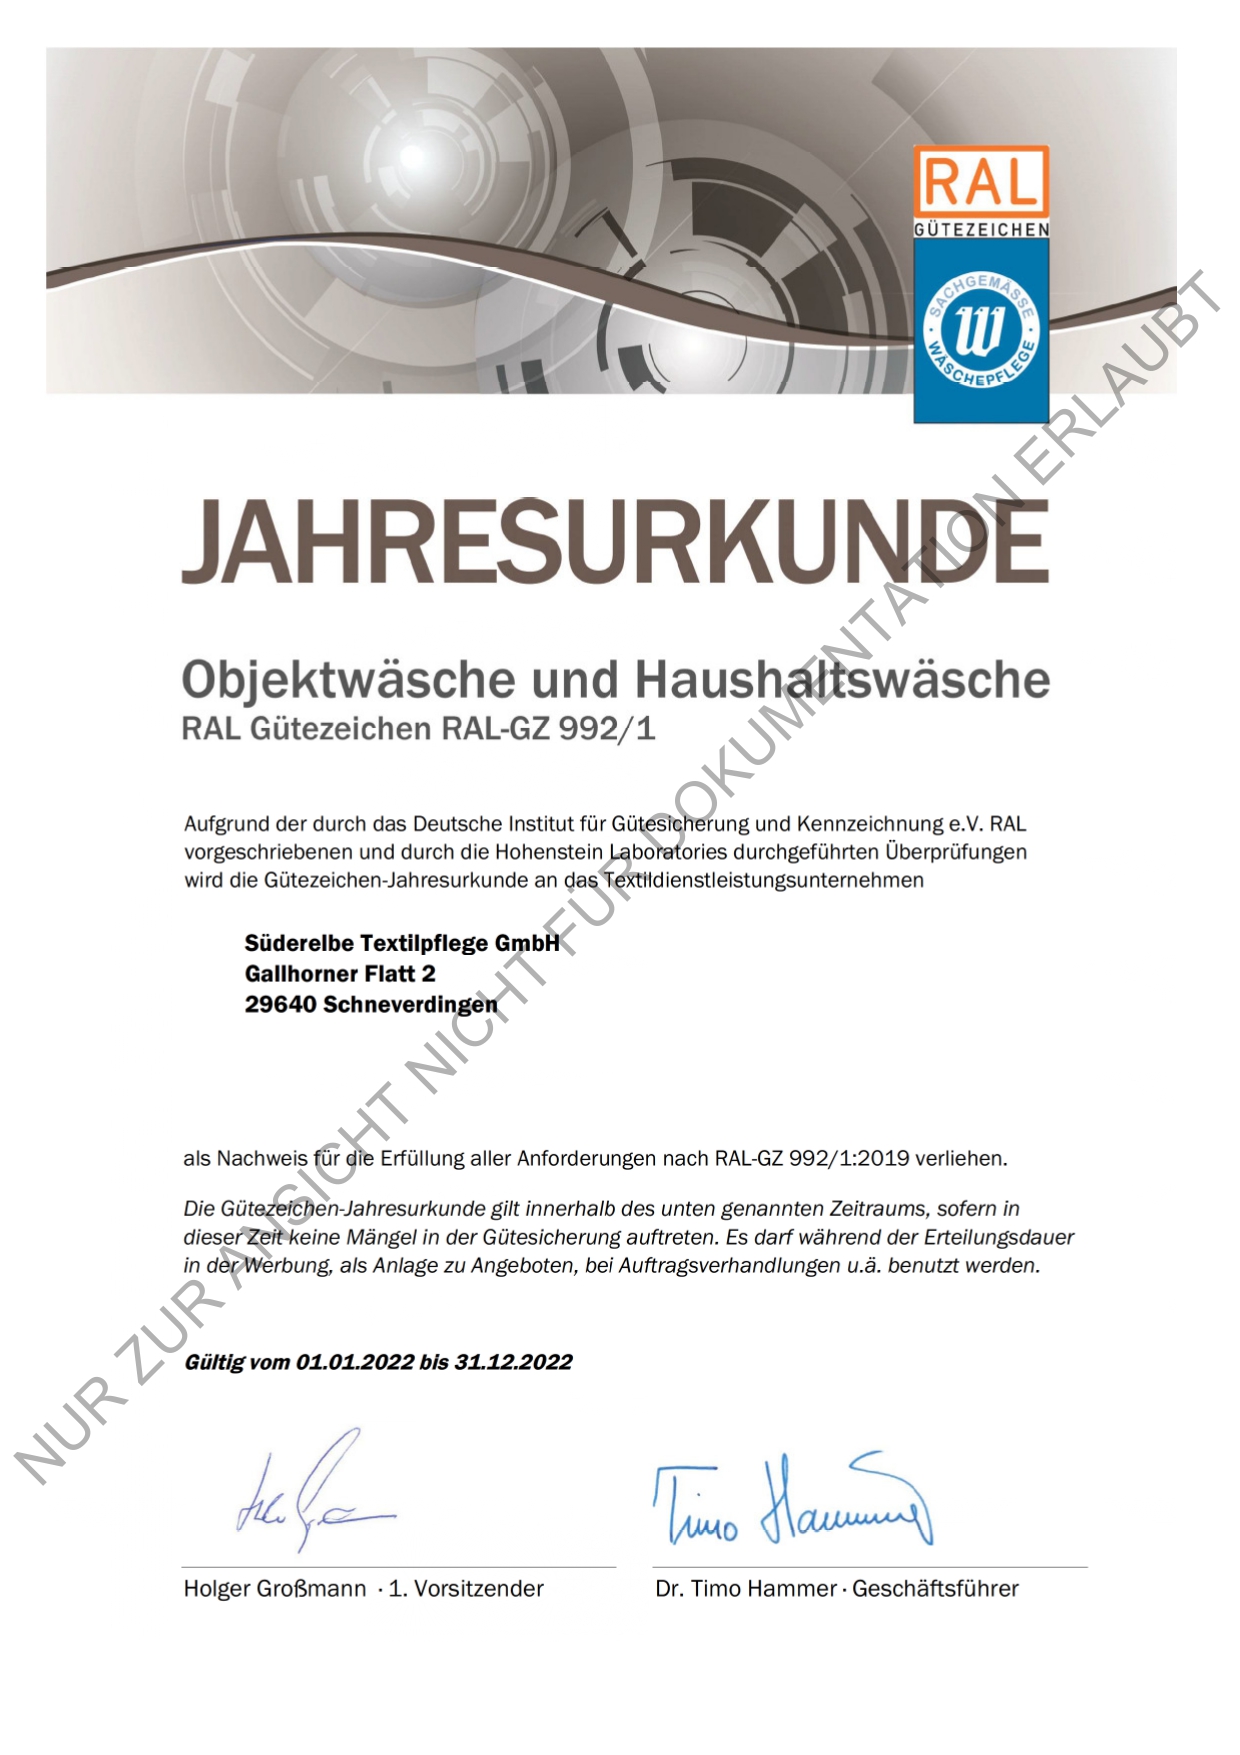 Süderelbe Textilpflege GmbH - Zertifikat